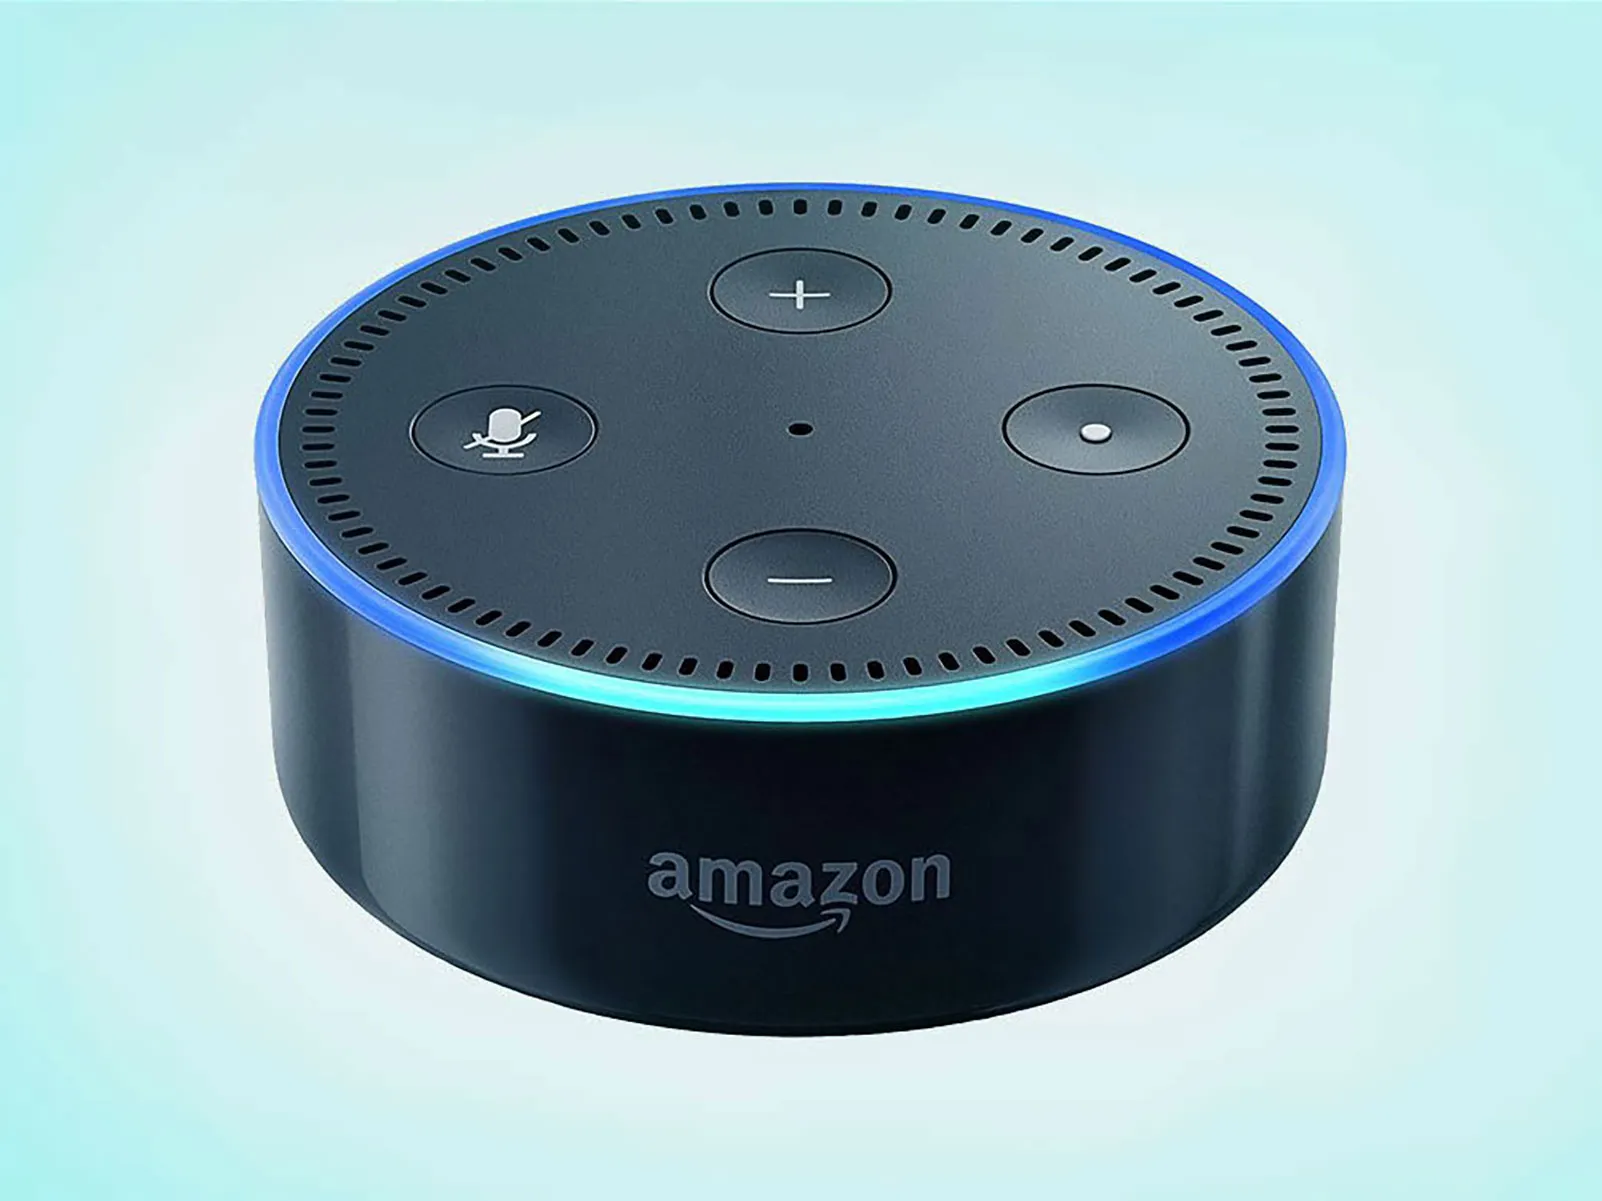 Amazon's Alexa